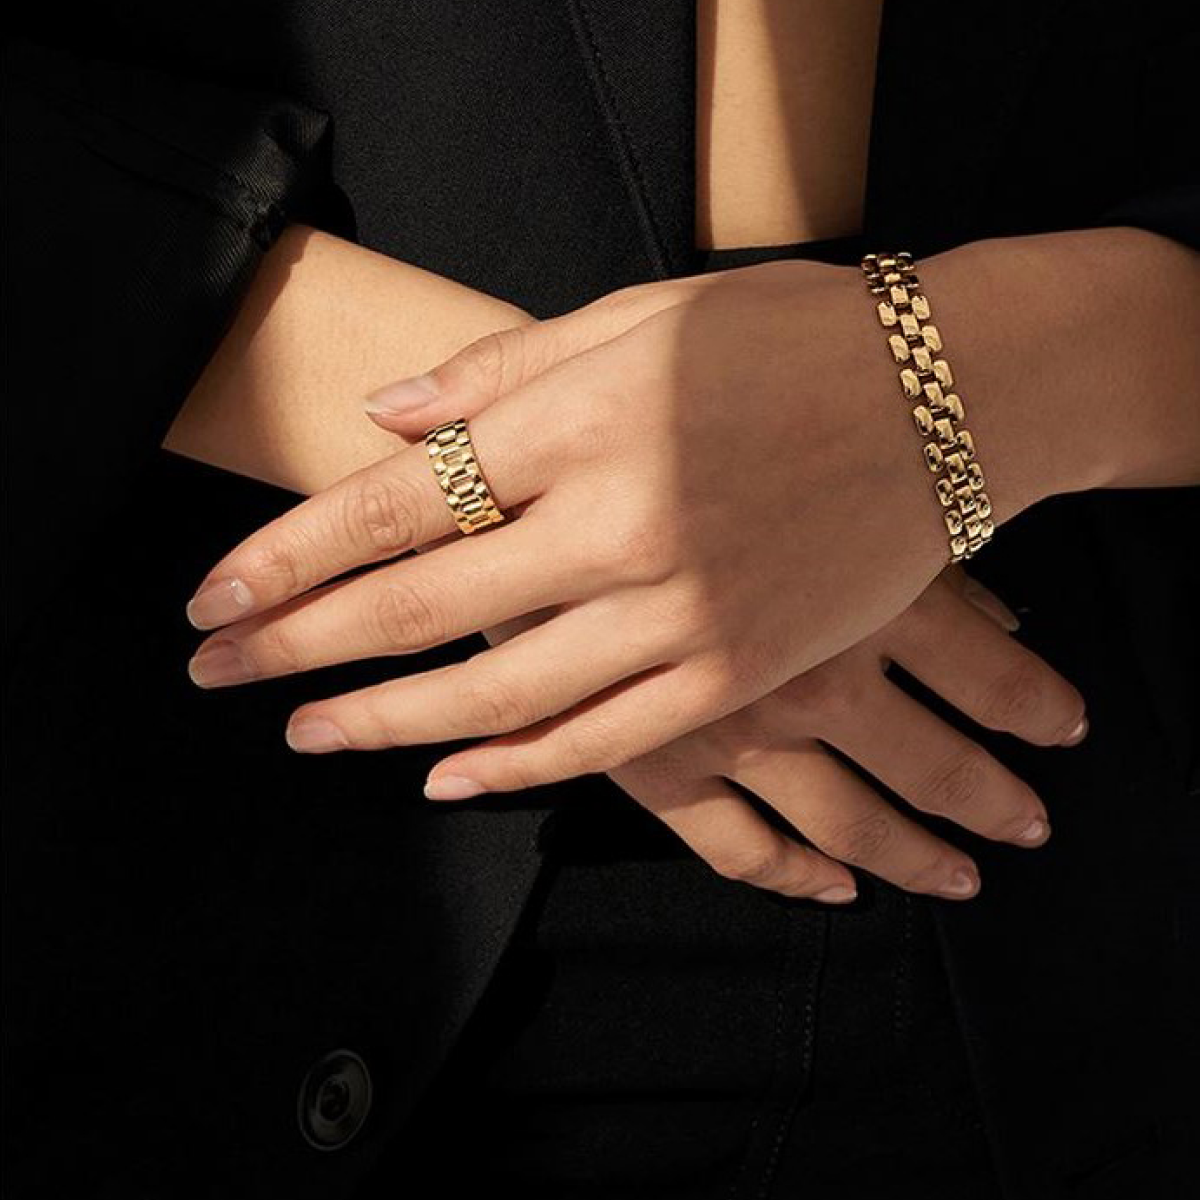 18K Gold Layered Textured Link Charm Bracelet